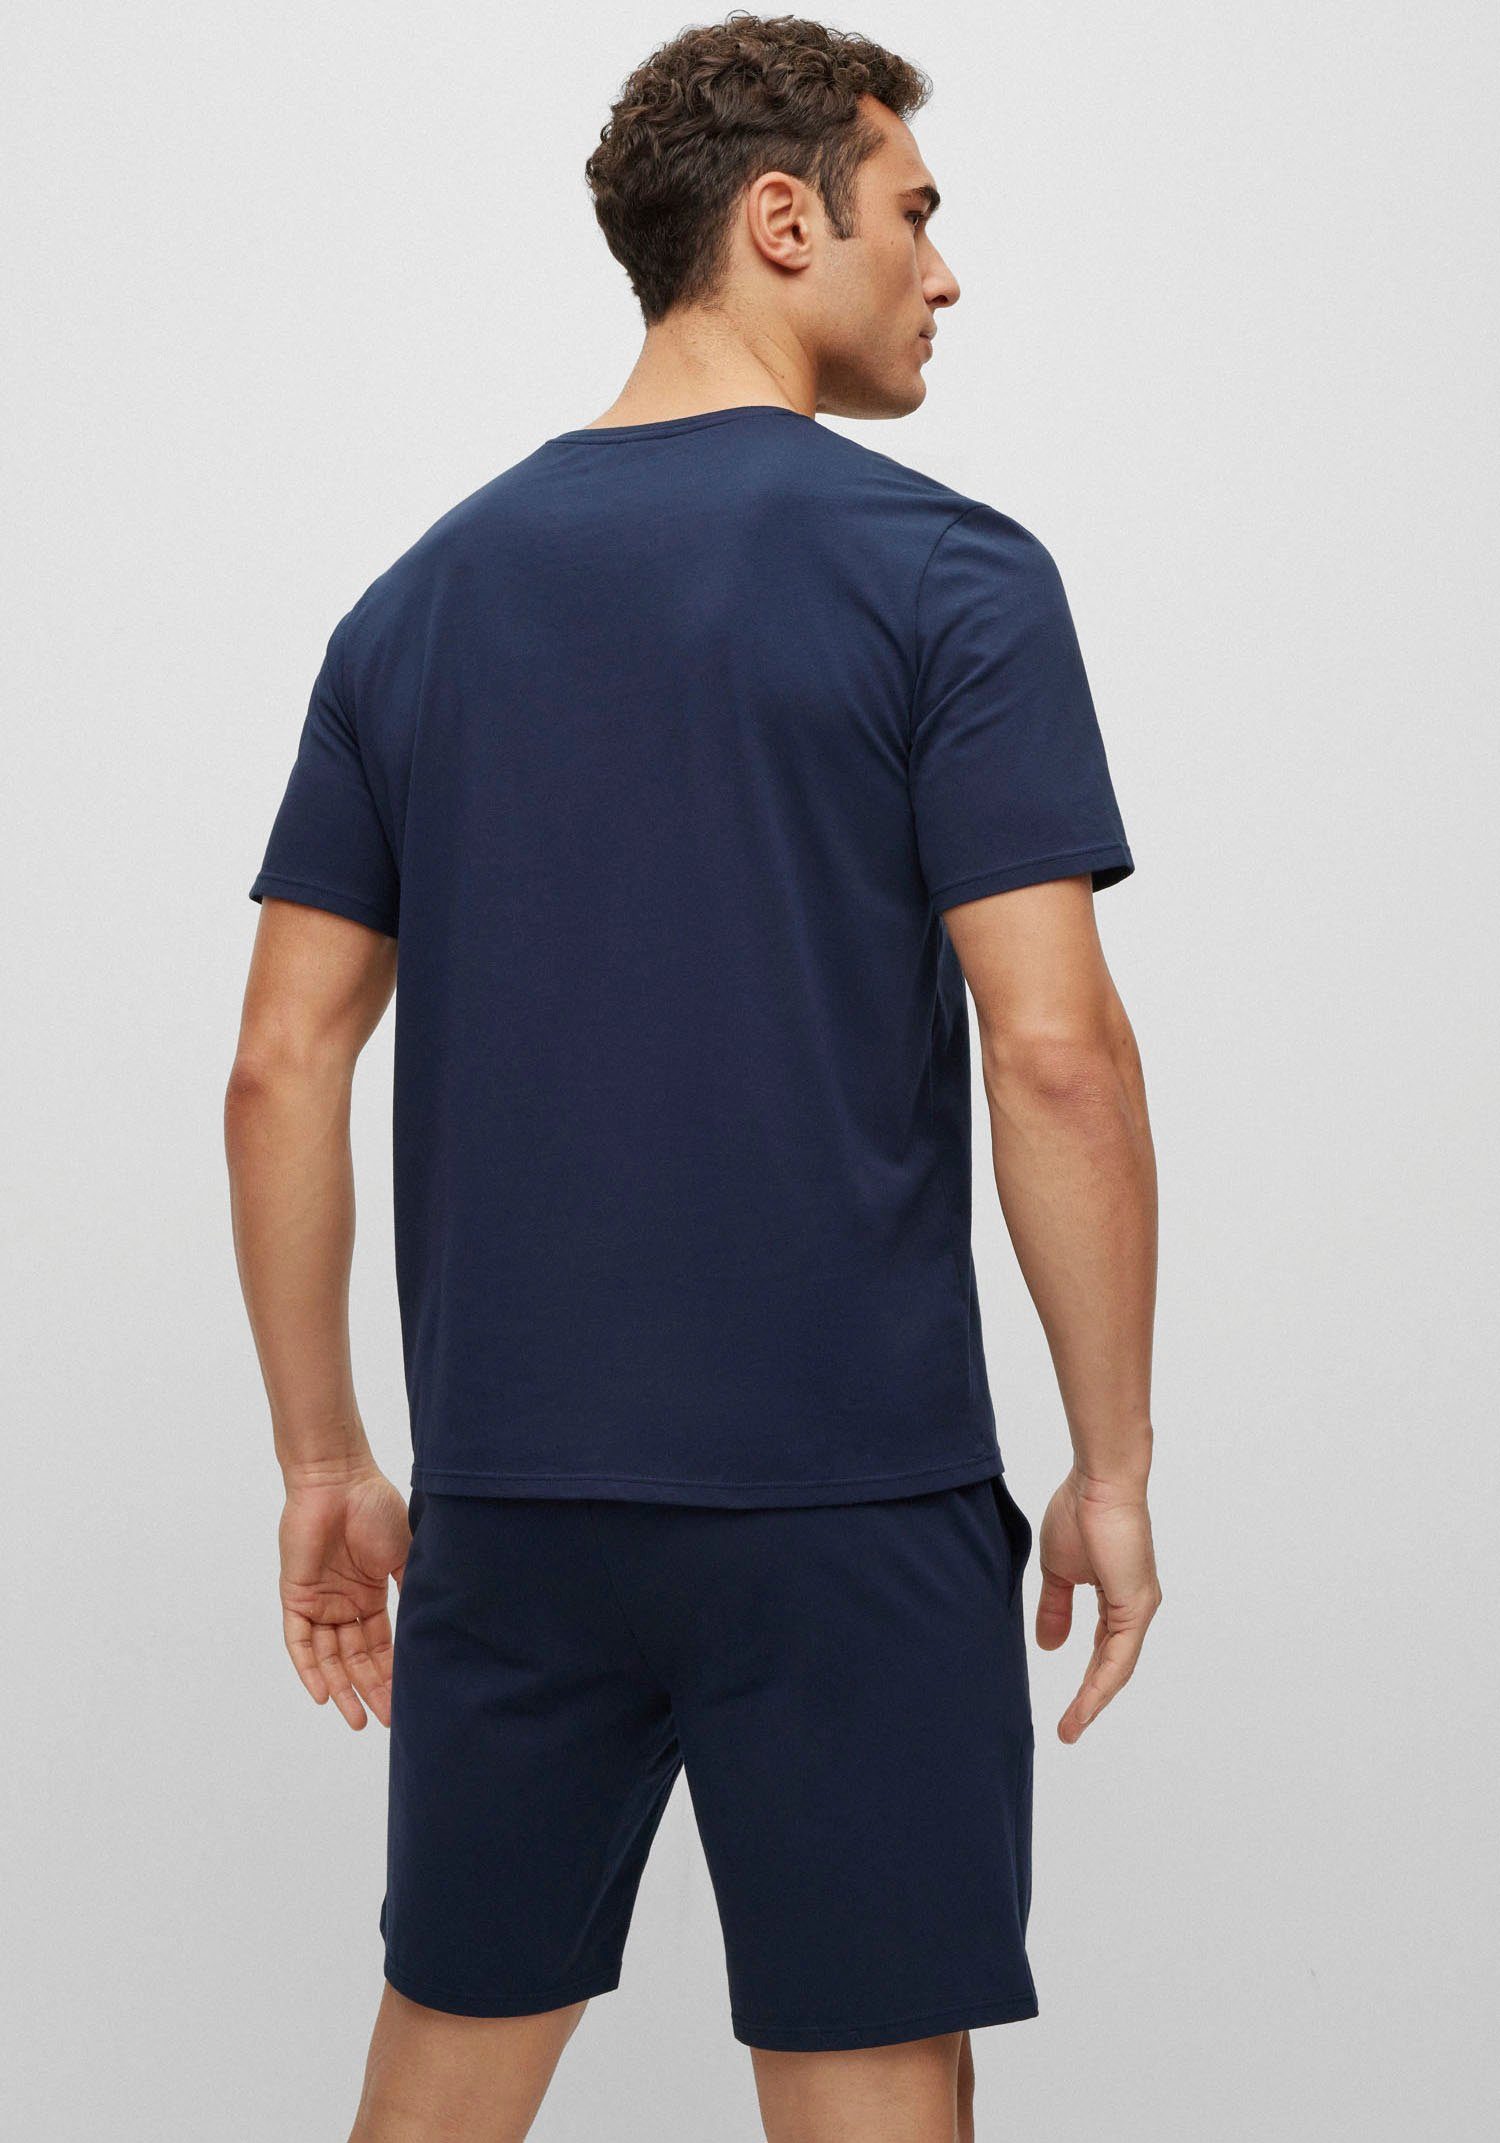 BOSS mit dunkelblau Logodruck T-Shirt